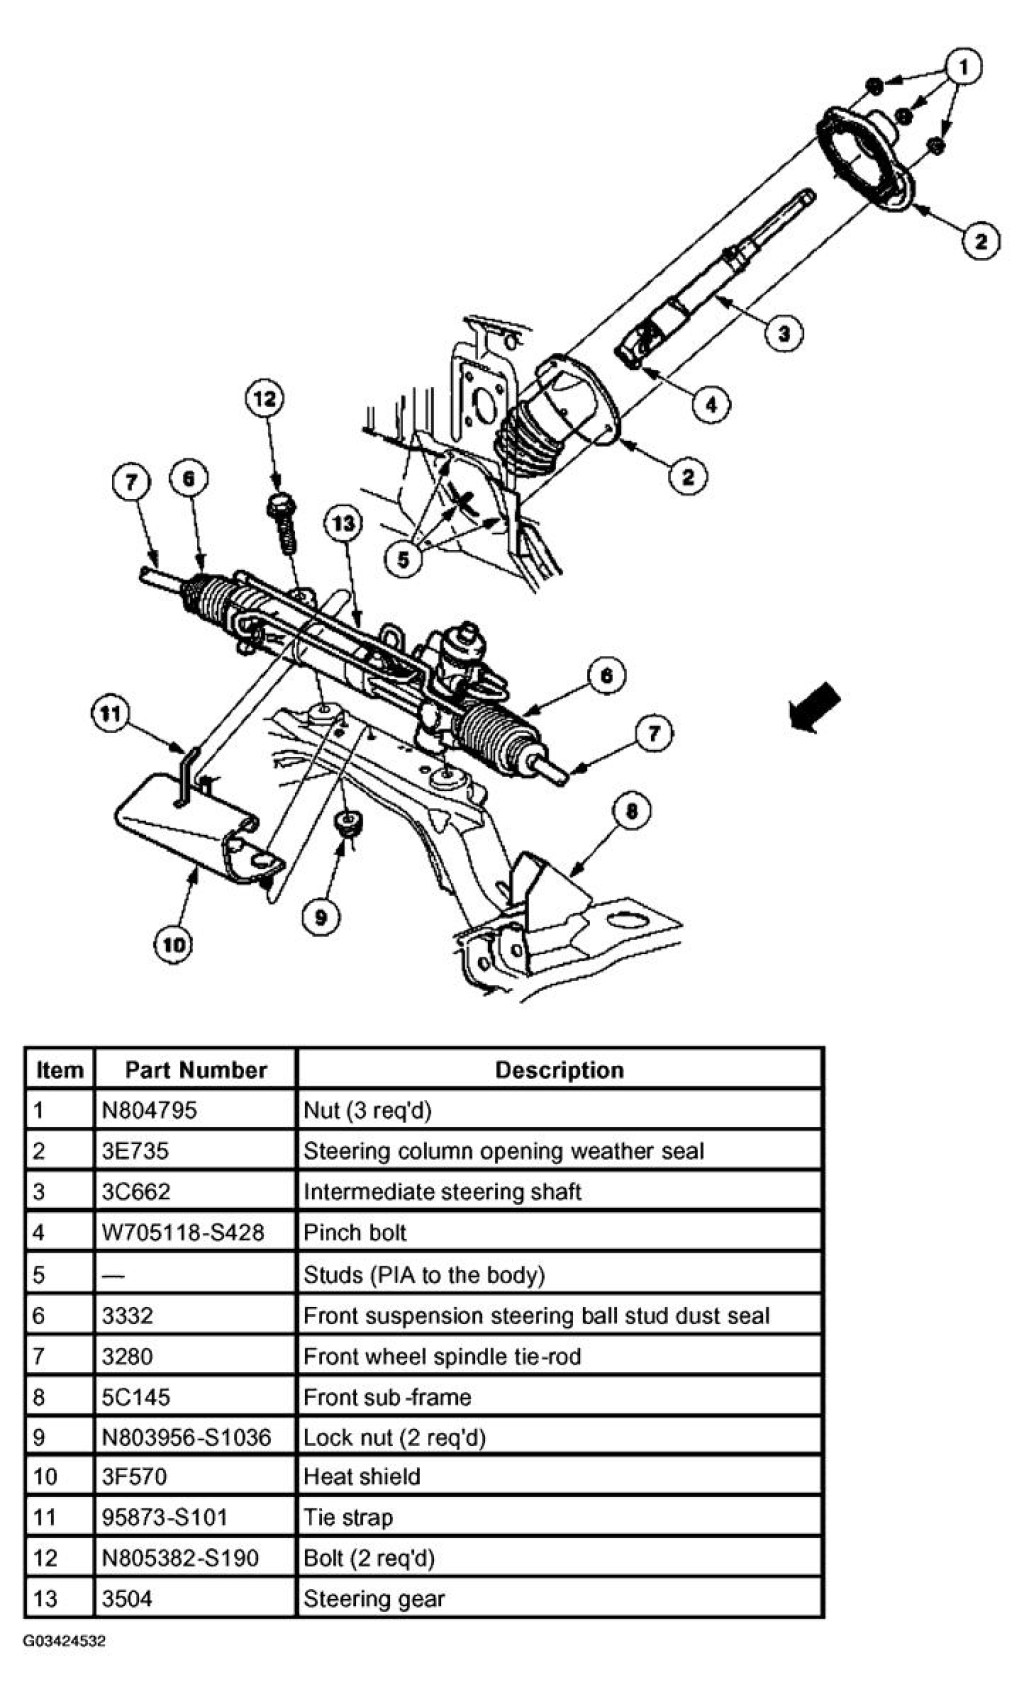 Picture of: FORD WINDSTAR Service Repair Manual by kmdwisbnvmk – Issuu